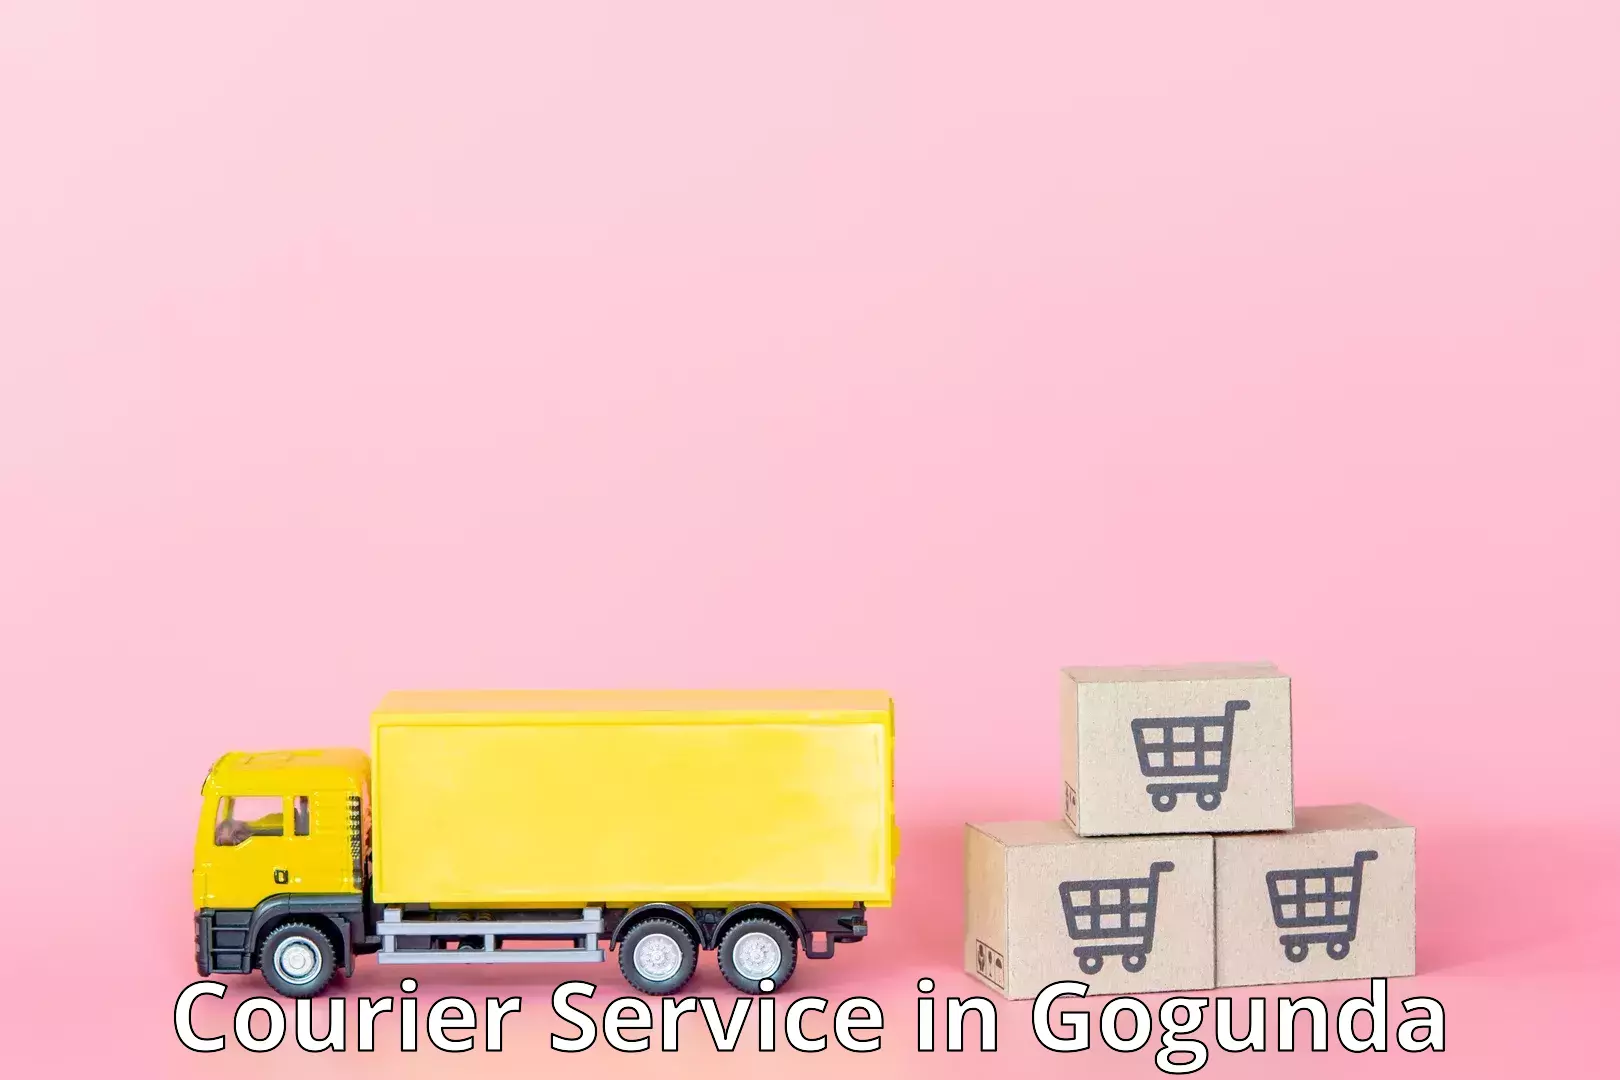 Nationwide delivery network in Gogunda